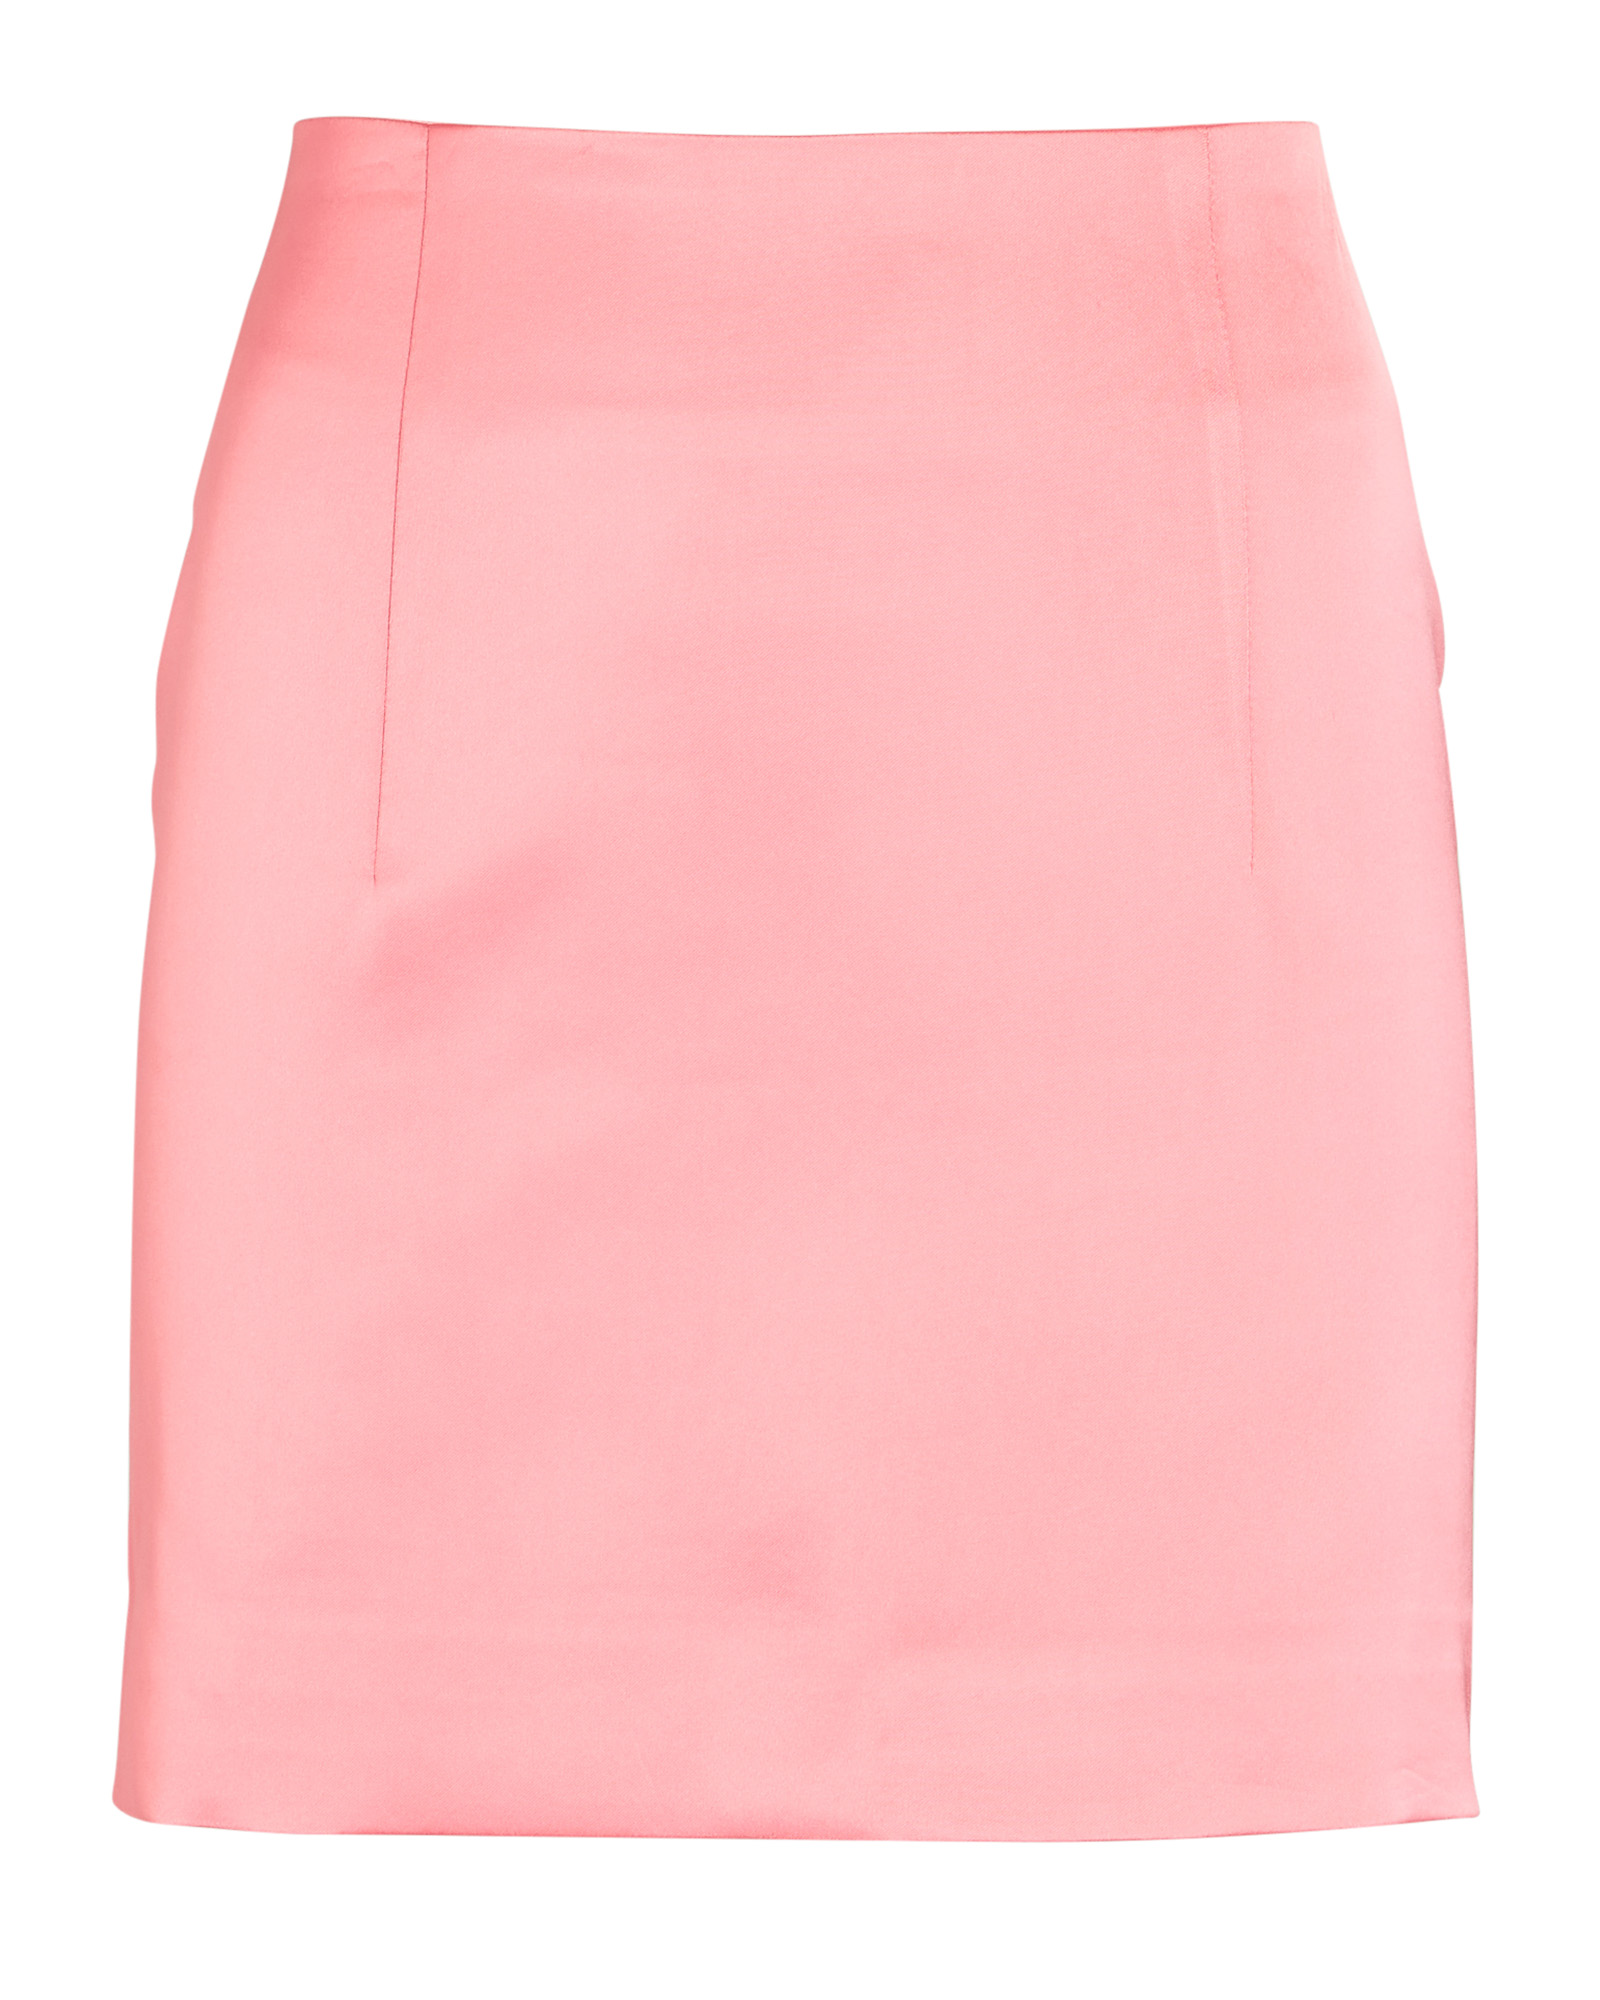 Gauge81 Mani Satin Mini Skirt | INTERMIX®